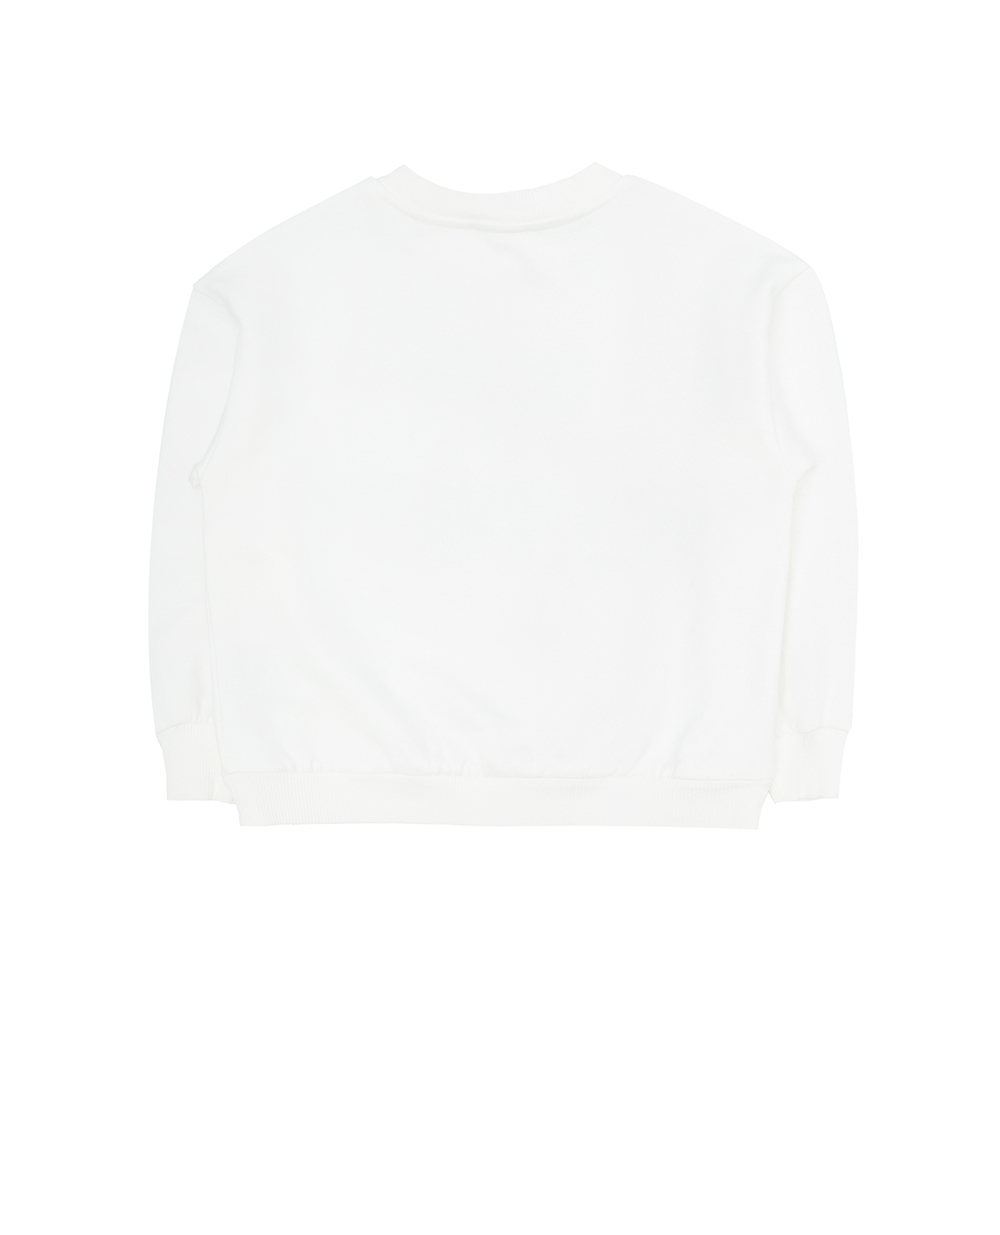 Свитшот Dolce&Gabbana Kids L5JW5D-G7BHB-S, белый цвет • Купить в интернет-магазине Kameron